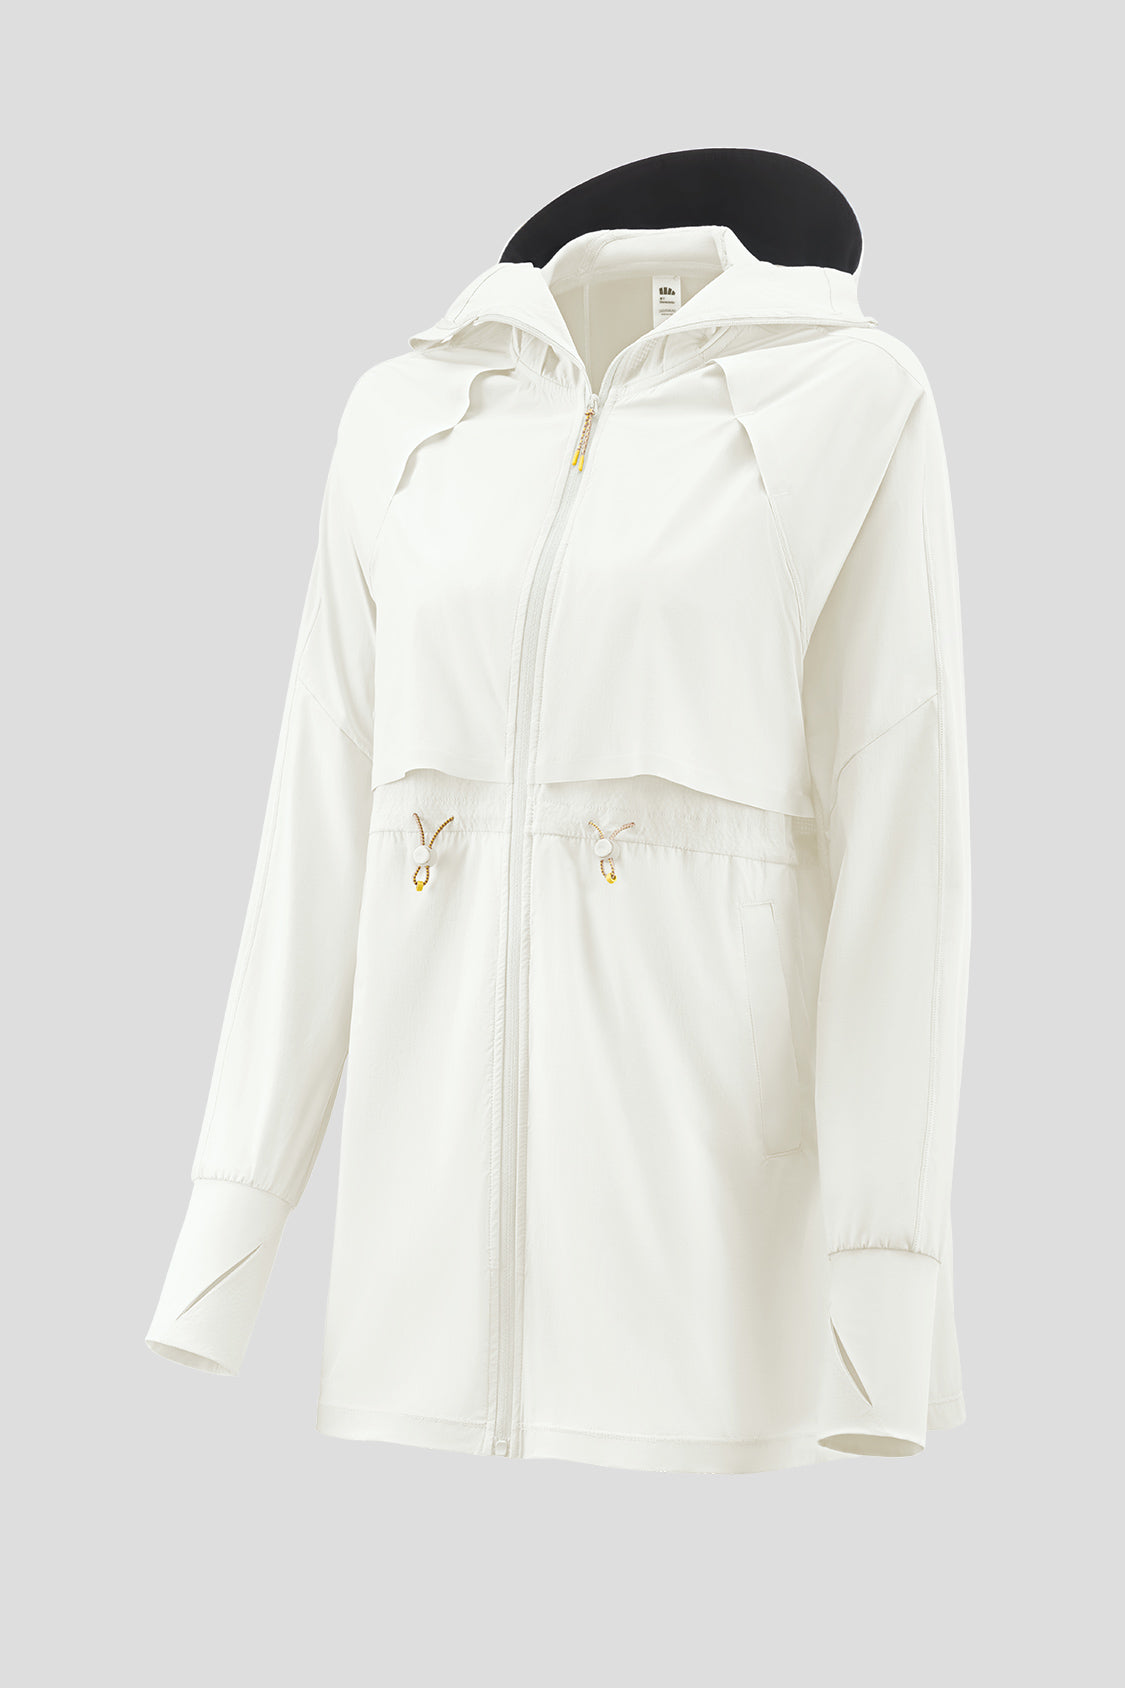 beneunder yunzi yee  women's ultra-lightweight mid-length sun protection clothing UPF50+ #color_creamy milk white